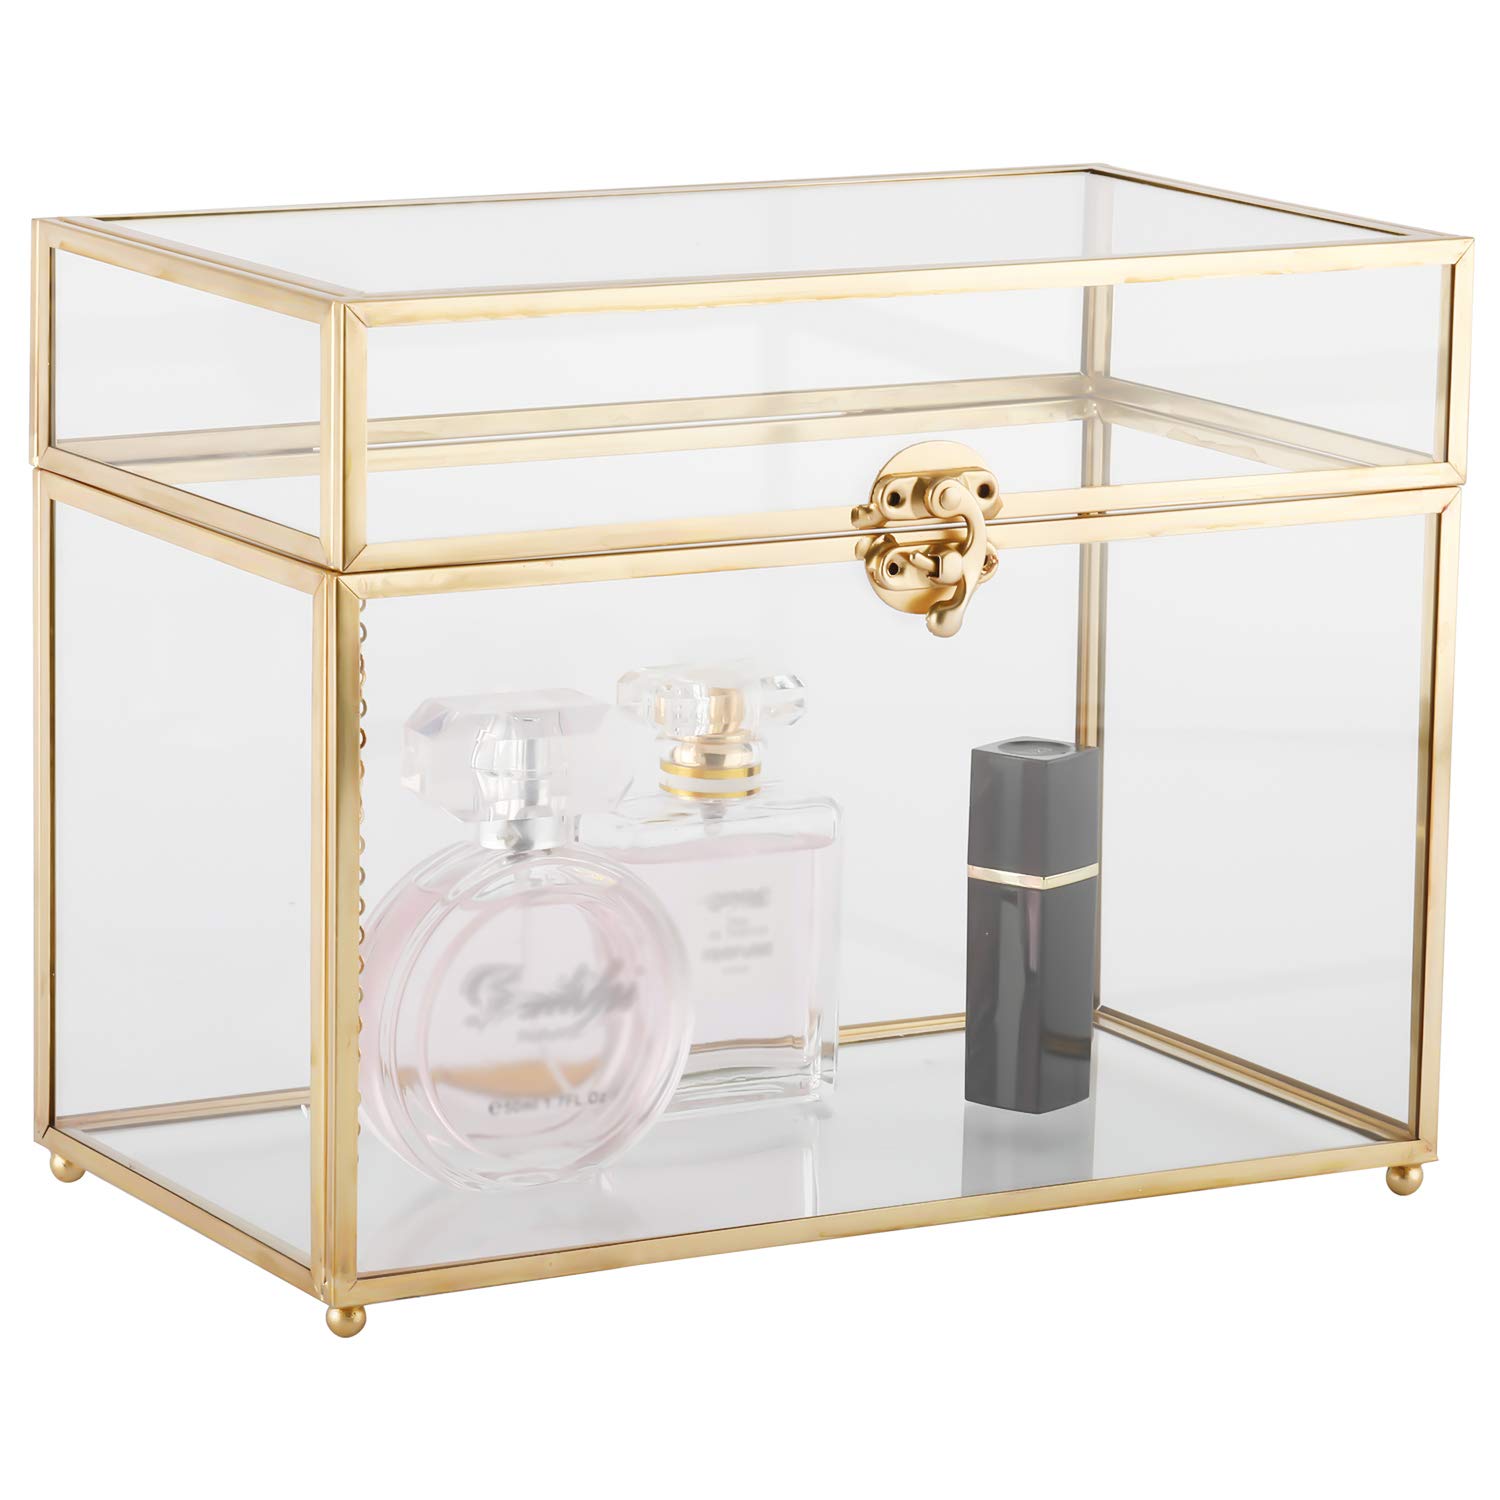 Homtone Glass Card Box, Clear Glass Decorative Box, Terrarium Organizer with Gold Metal Frame, Large Glass Display Box for Wedding Reception, Wishw...